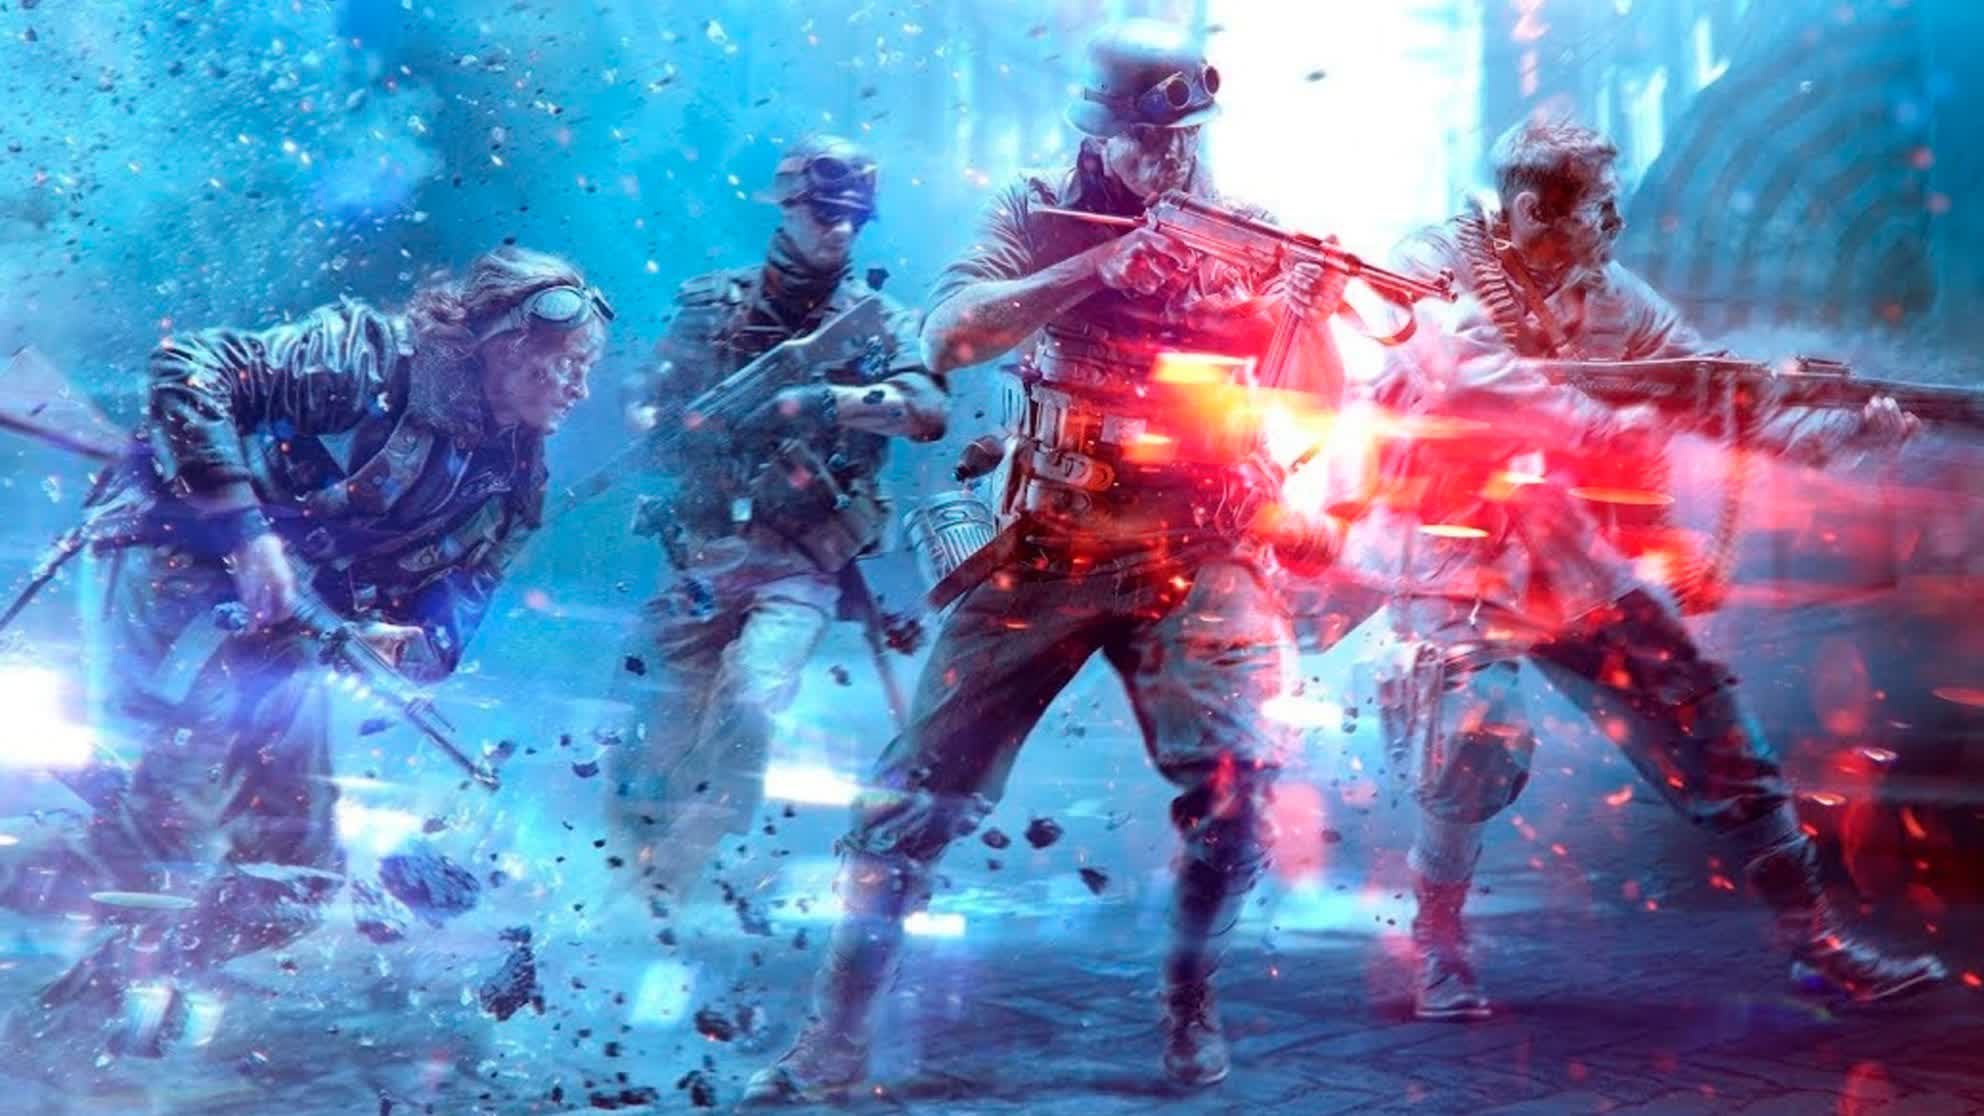 EA teases next Battlefield game reveal for June 9